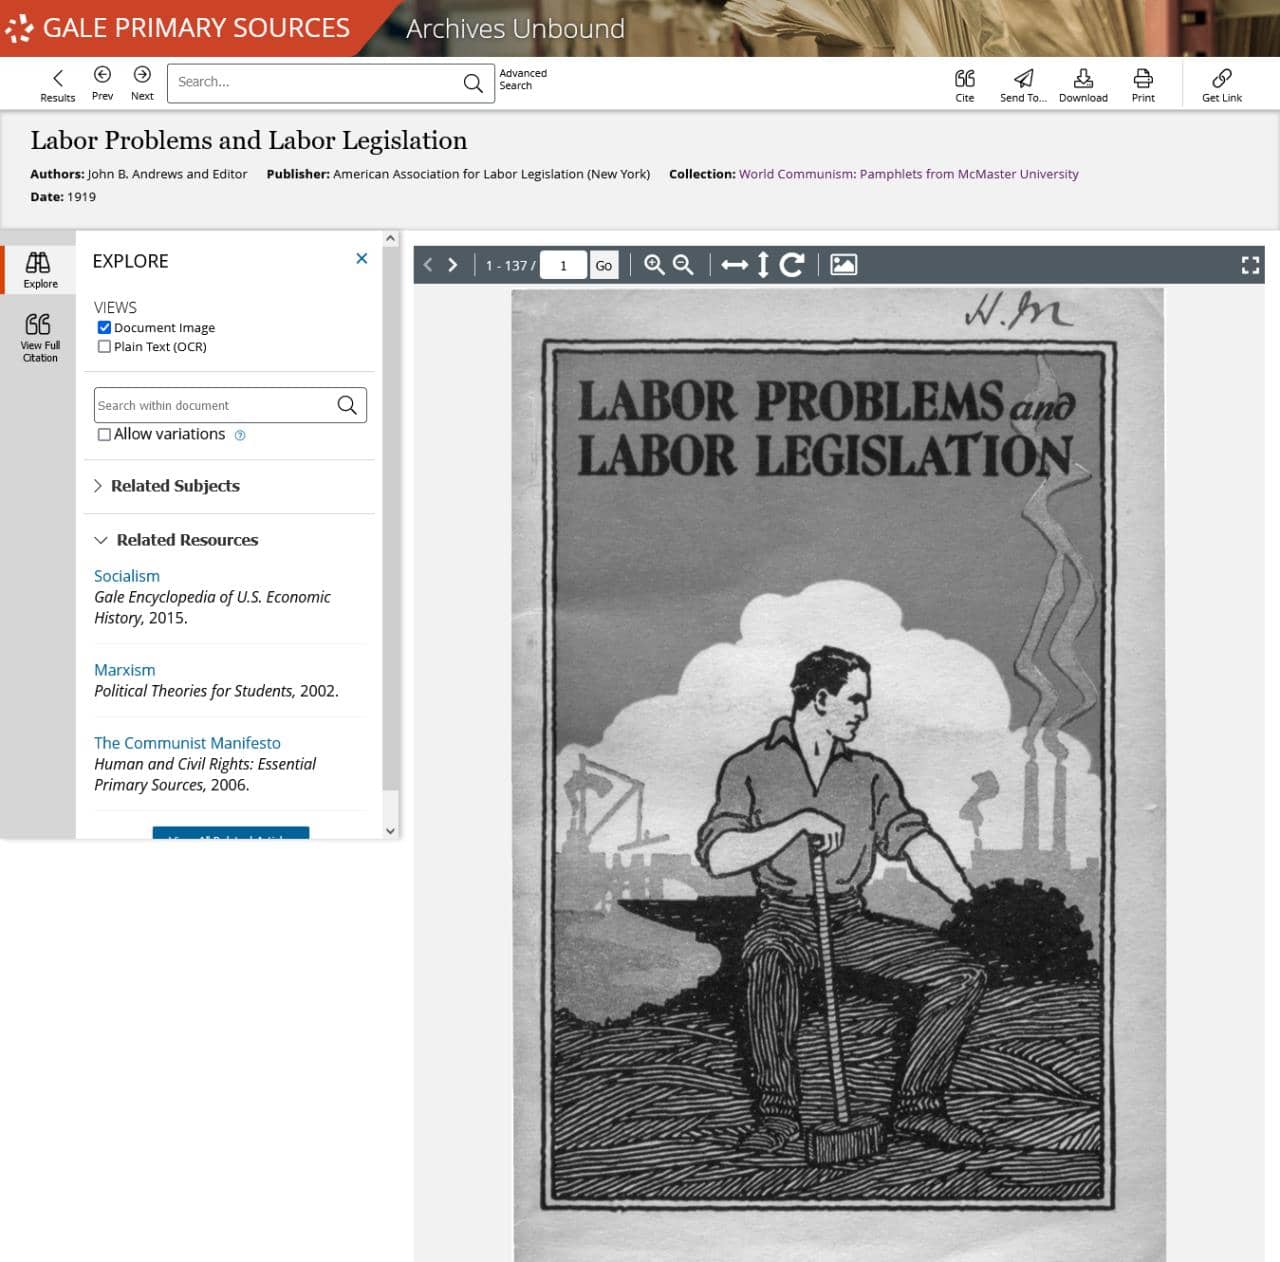 Andrews, John B., and Editor. Labor Problems and Labor Legislation. American Association for Labor Legislation, 1919.